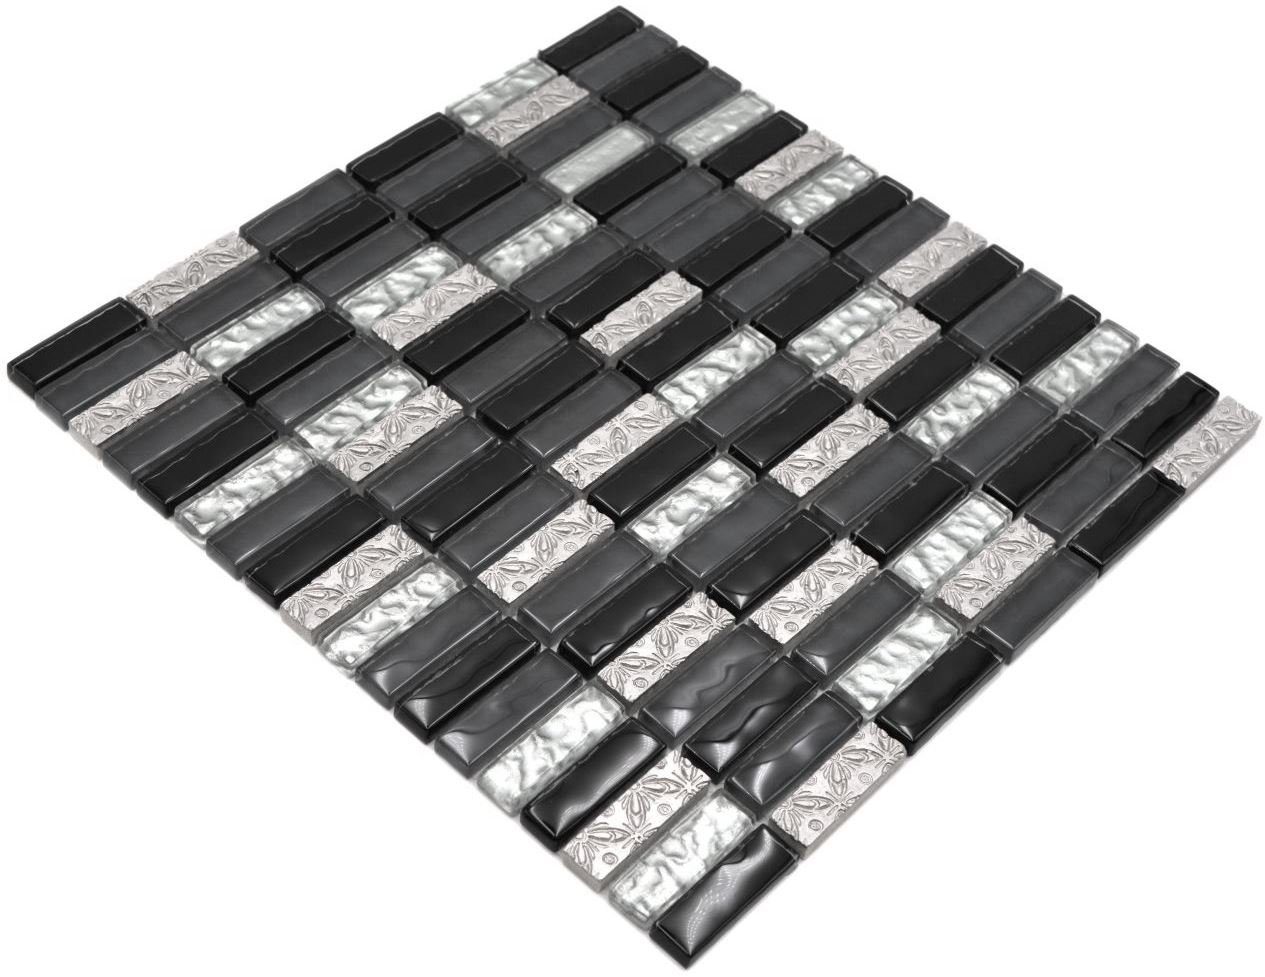 Mosani Matten schwarz 10 grau / Mosaikfliesen Mosaik Glasmosaik glänzend Resin